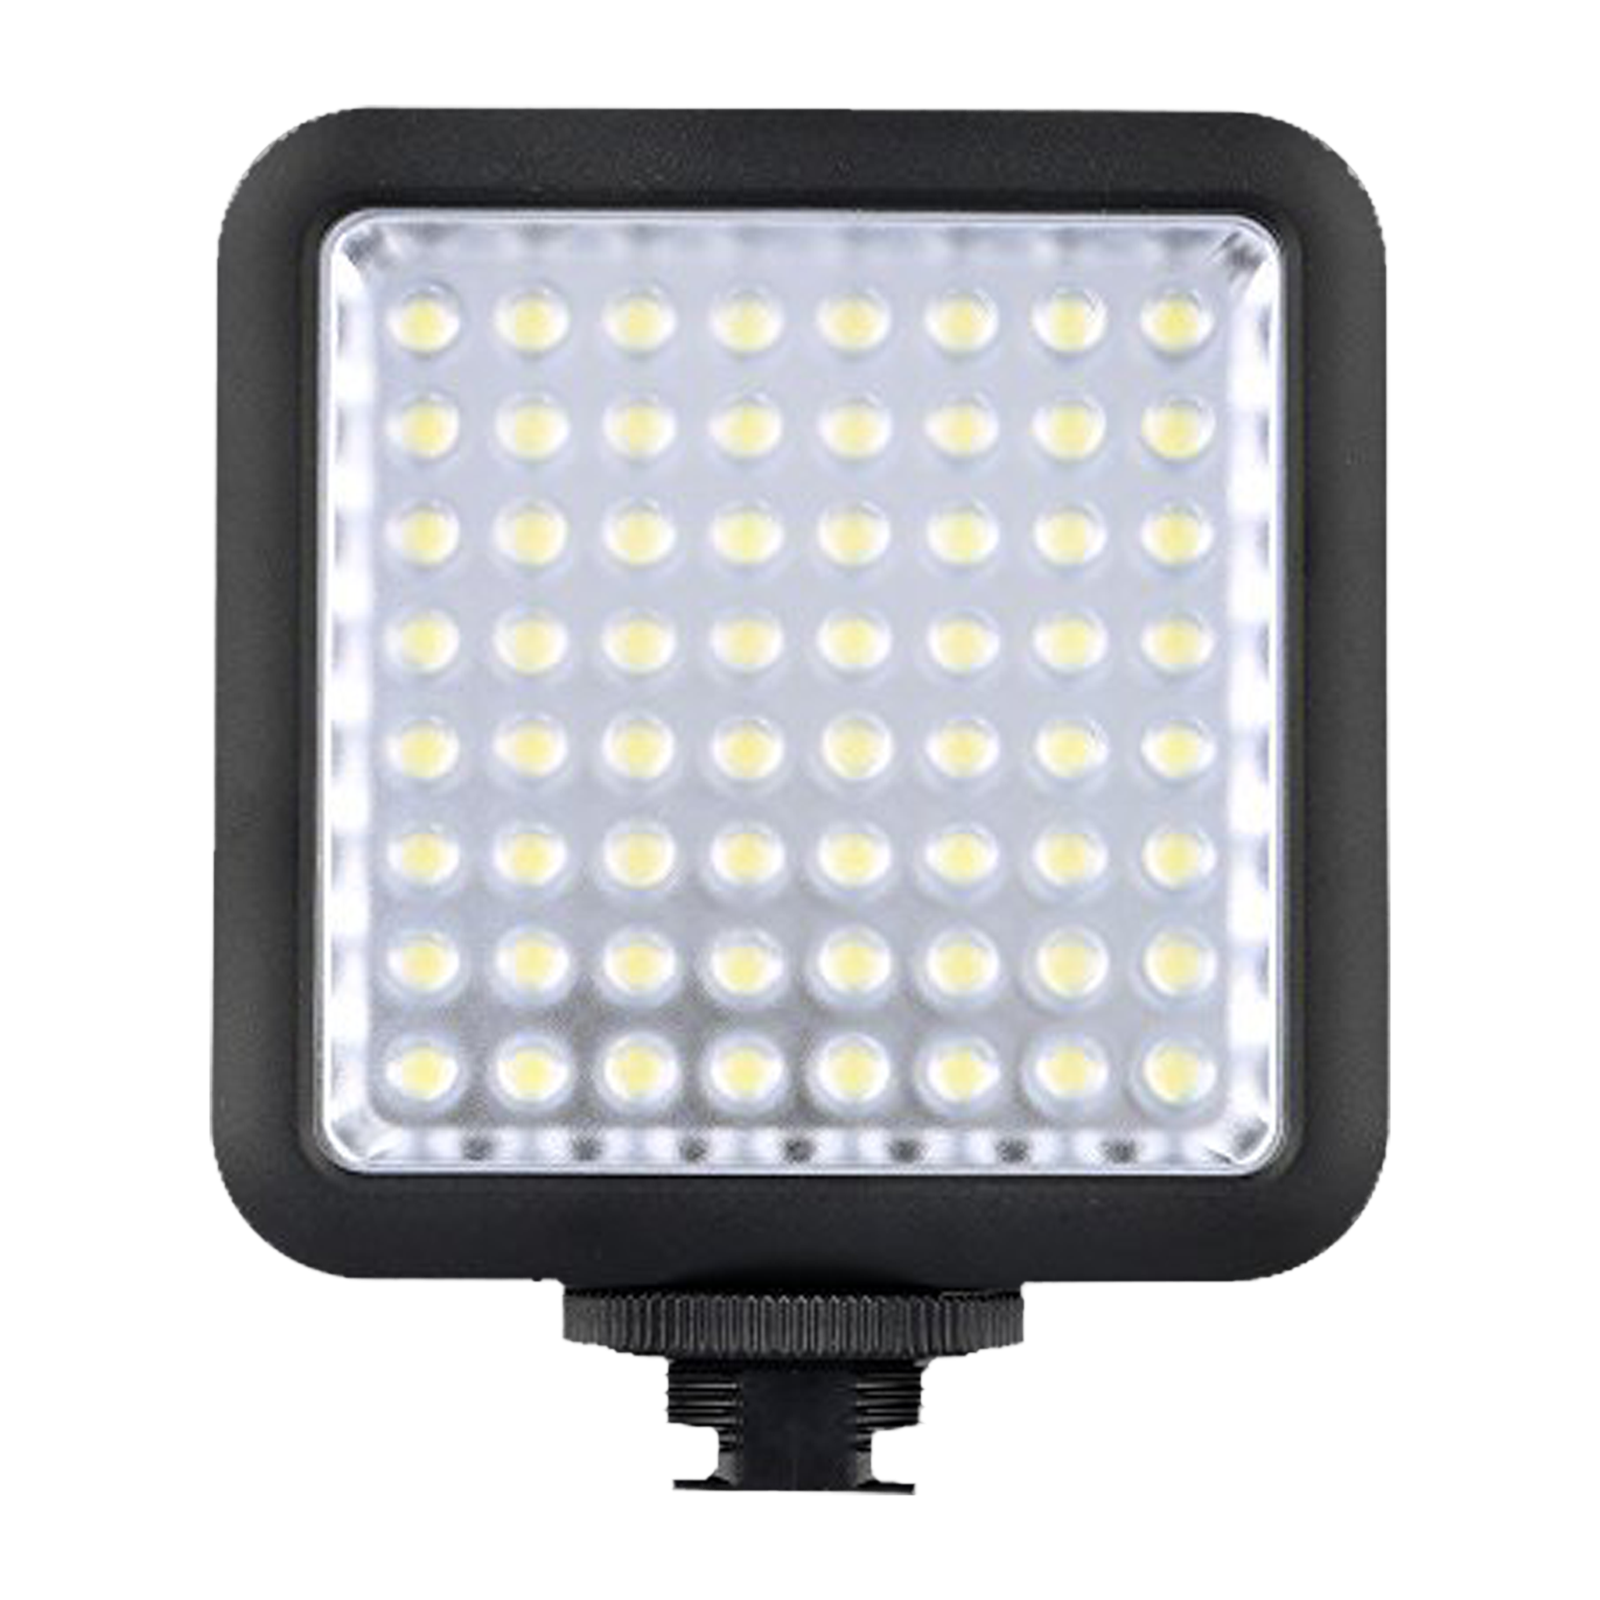 Godox M64 LED Video Light for Photography & Videography (Interlocking Design)